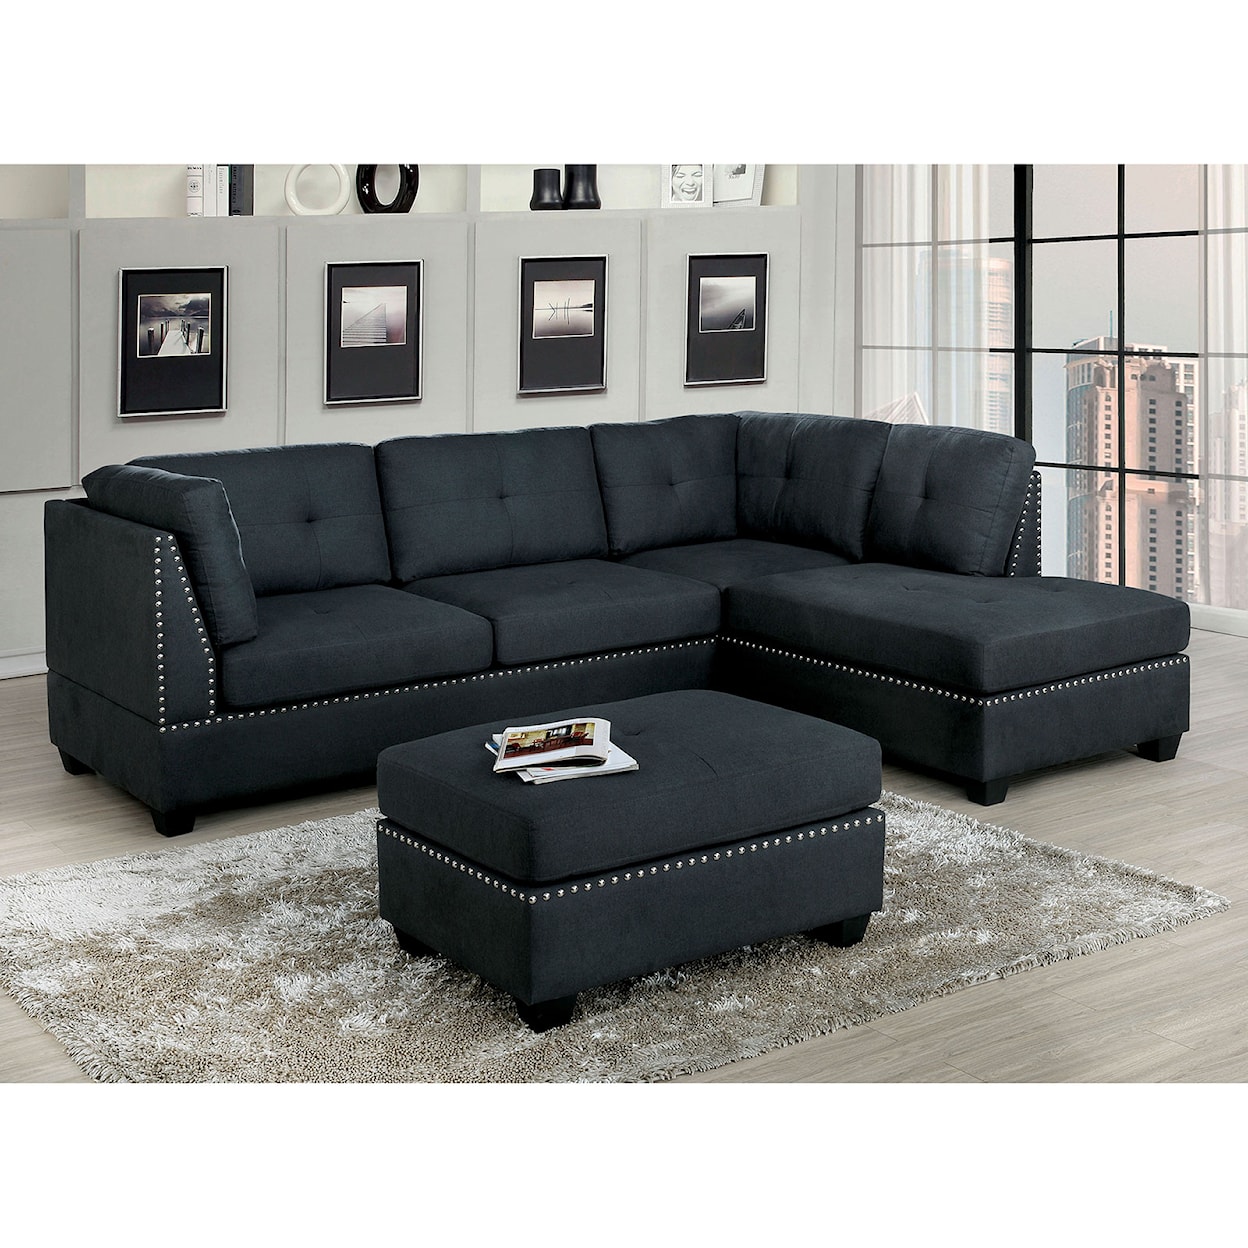 Furniture of America Lita Sectional